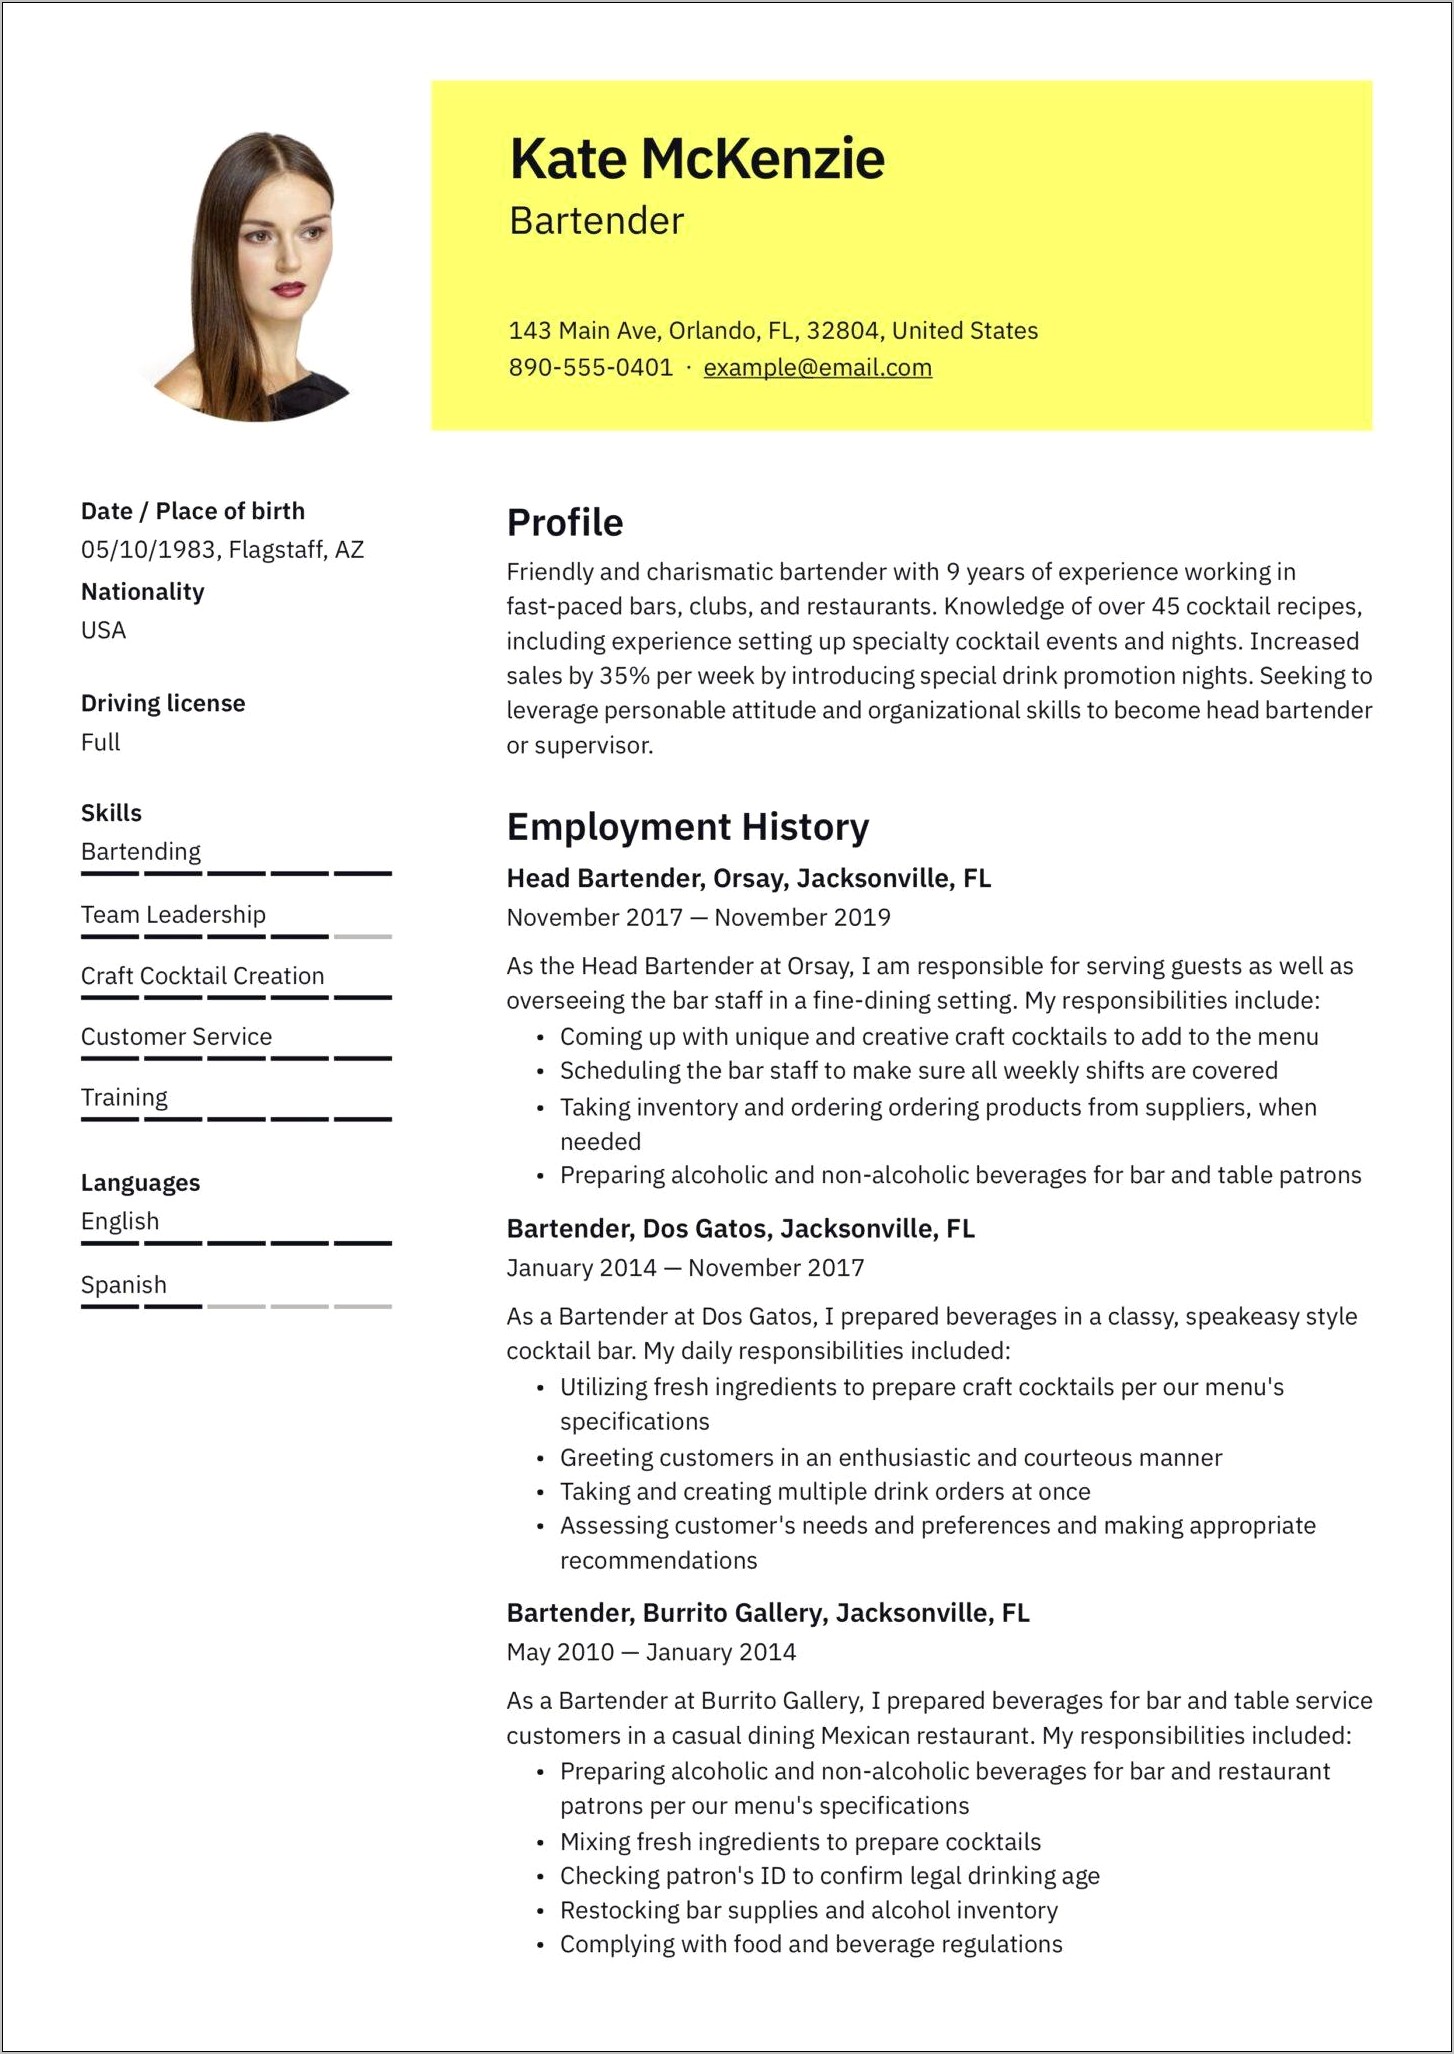 Lead Bartender Job Description For Resume